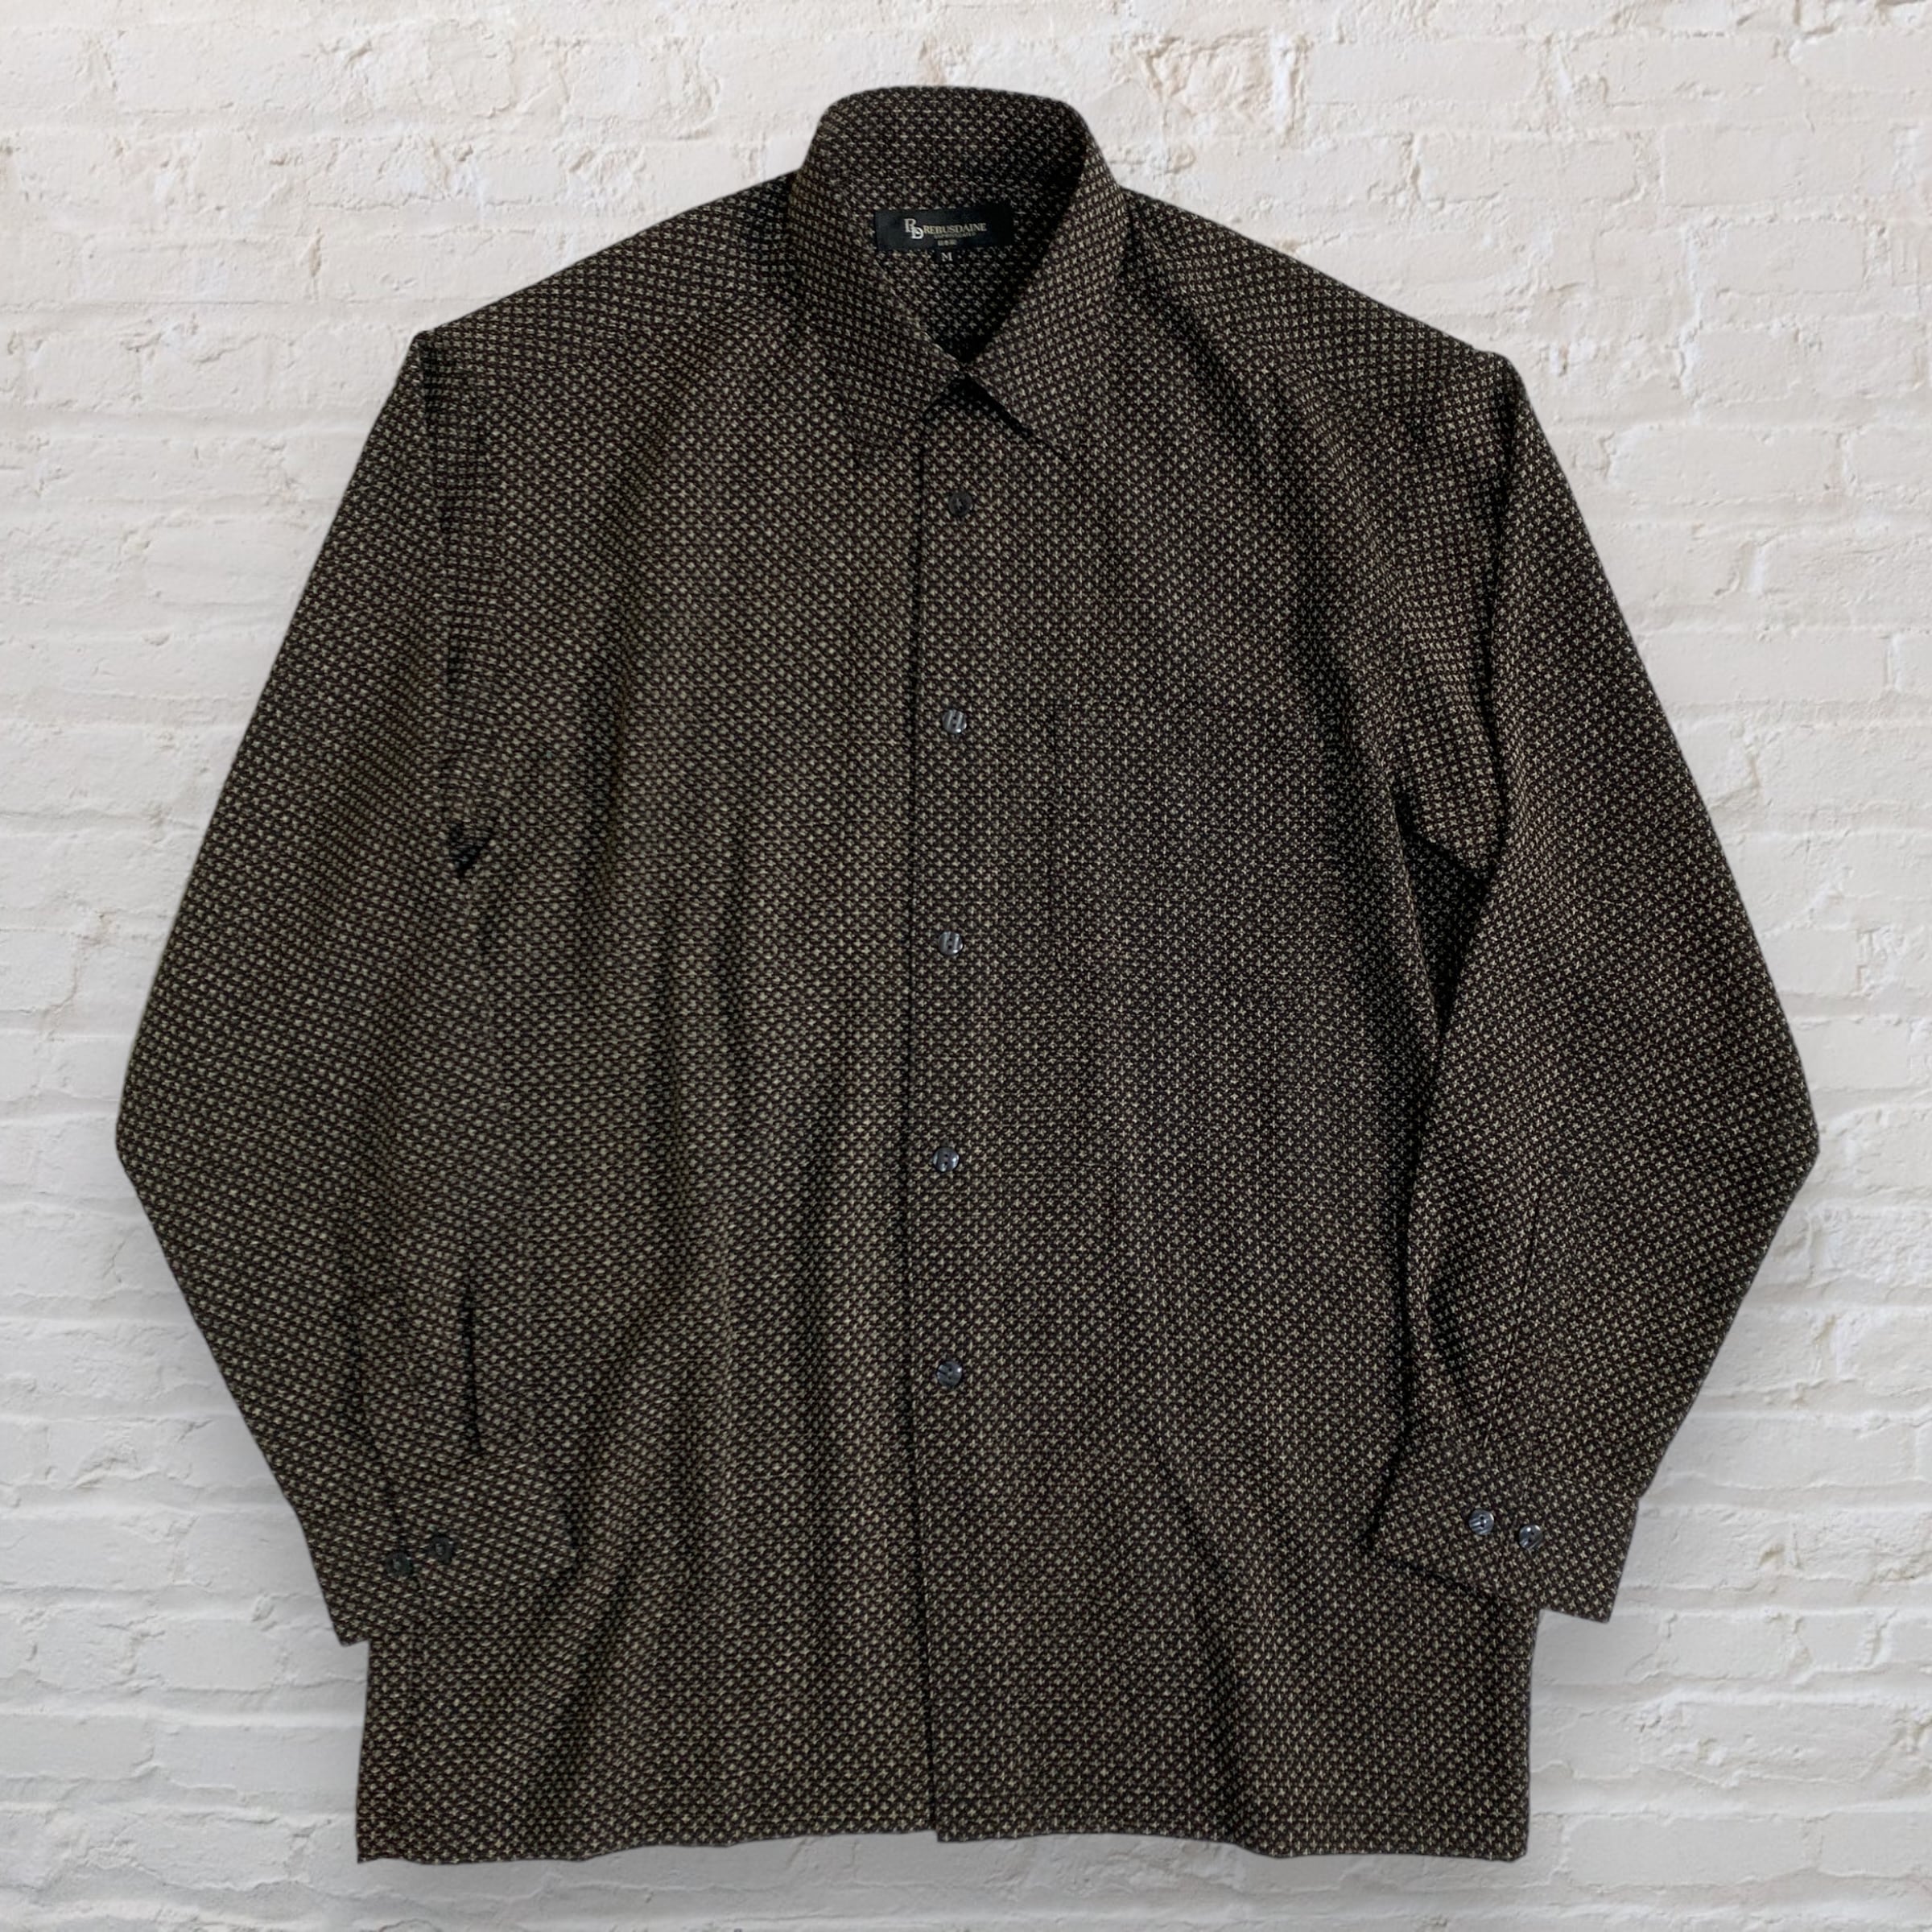 【REBUSDAINE】vintage full patterned L/S shirt 総柄長袖シャツ